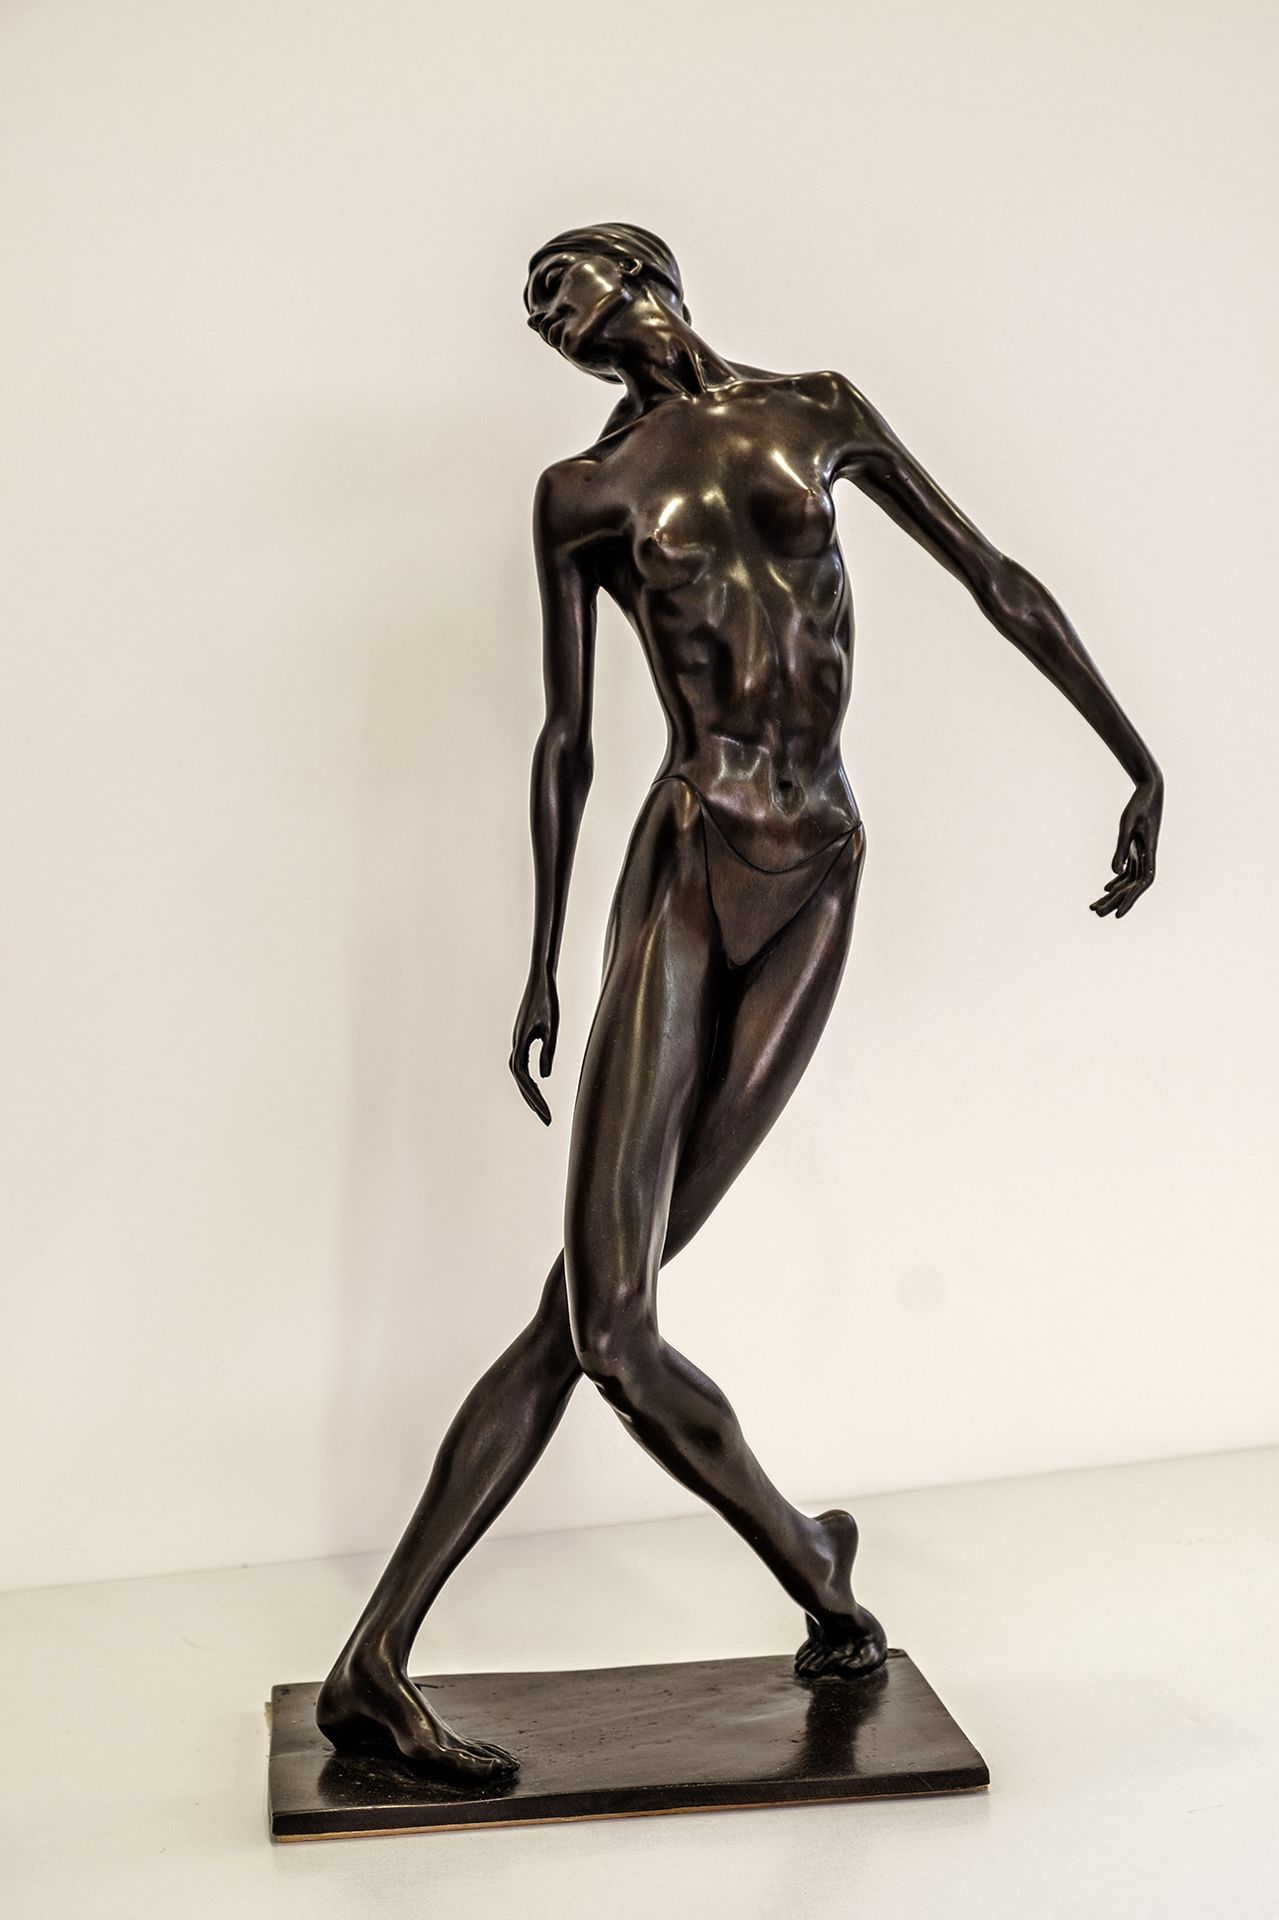 ALEXANDER KOSSUTH, Ballerina Alexander Kossuth

(德国 1947年)



舞蹈家

青铜失蜡铸造 cm 42x&hellip;